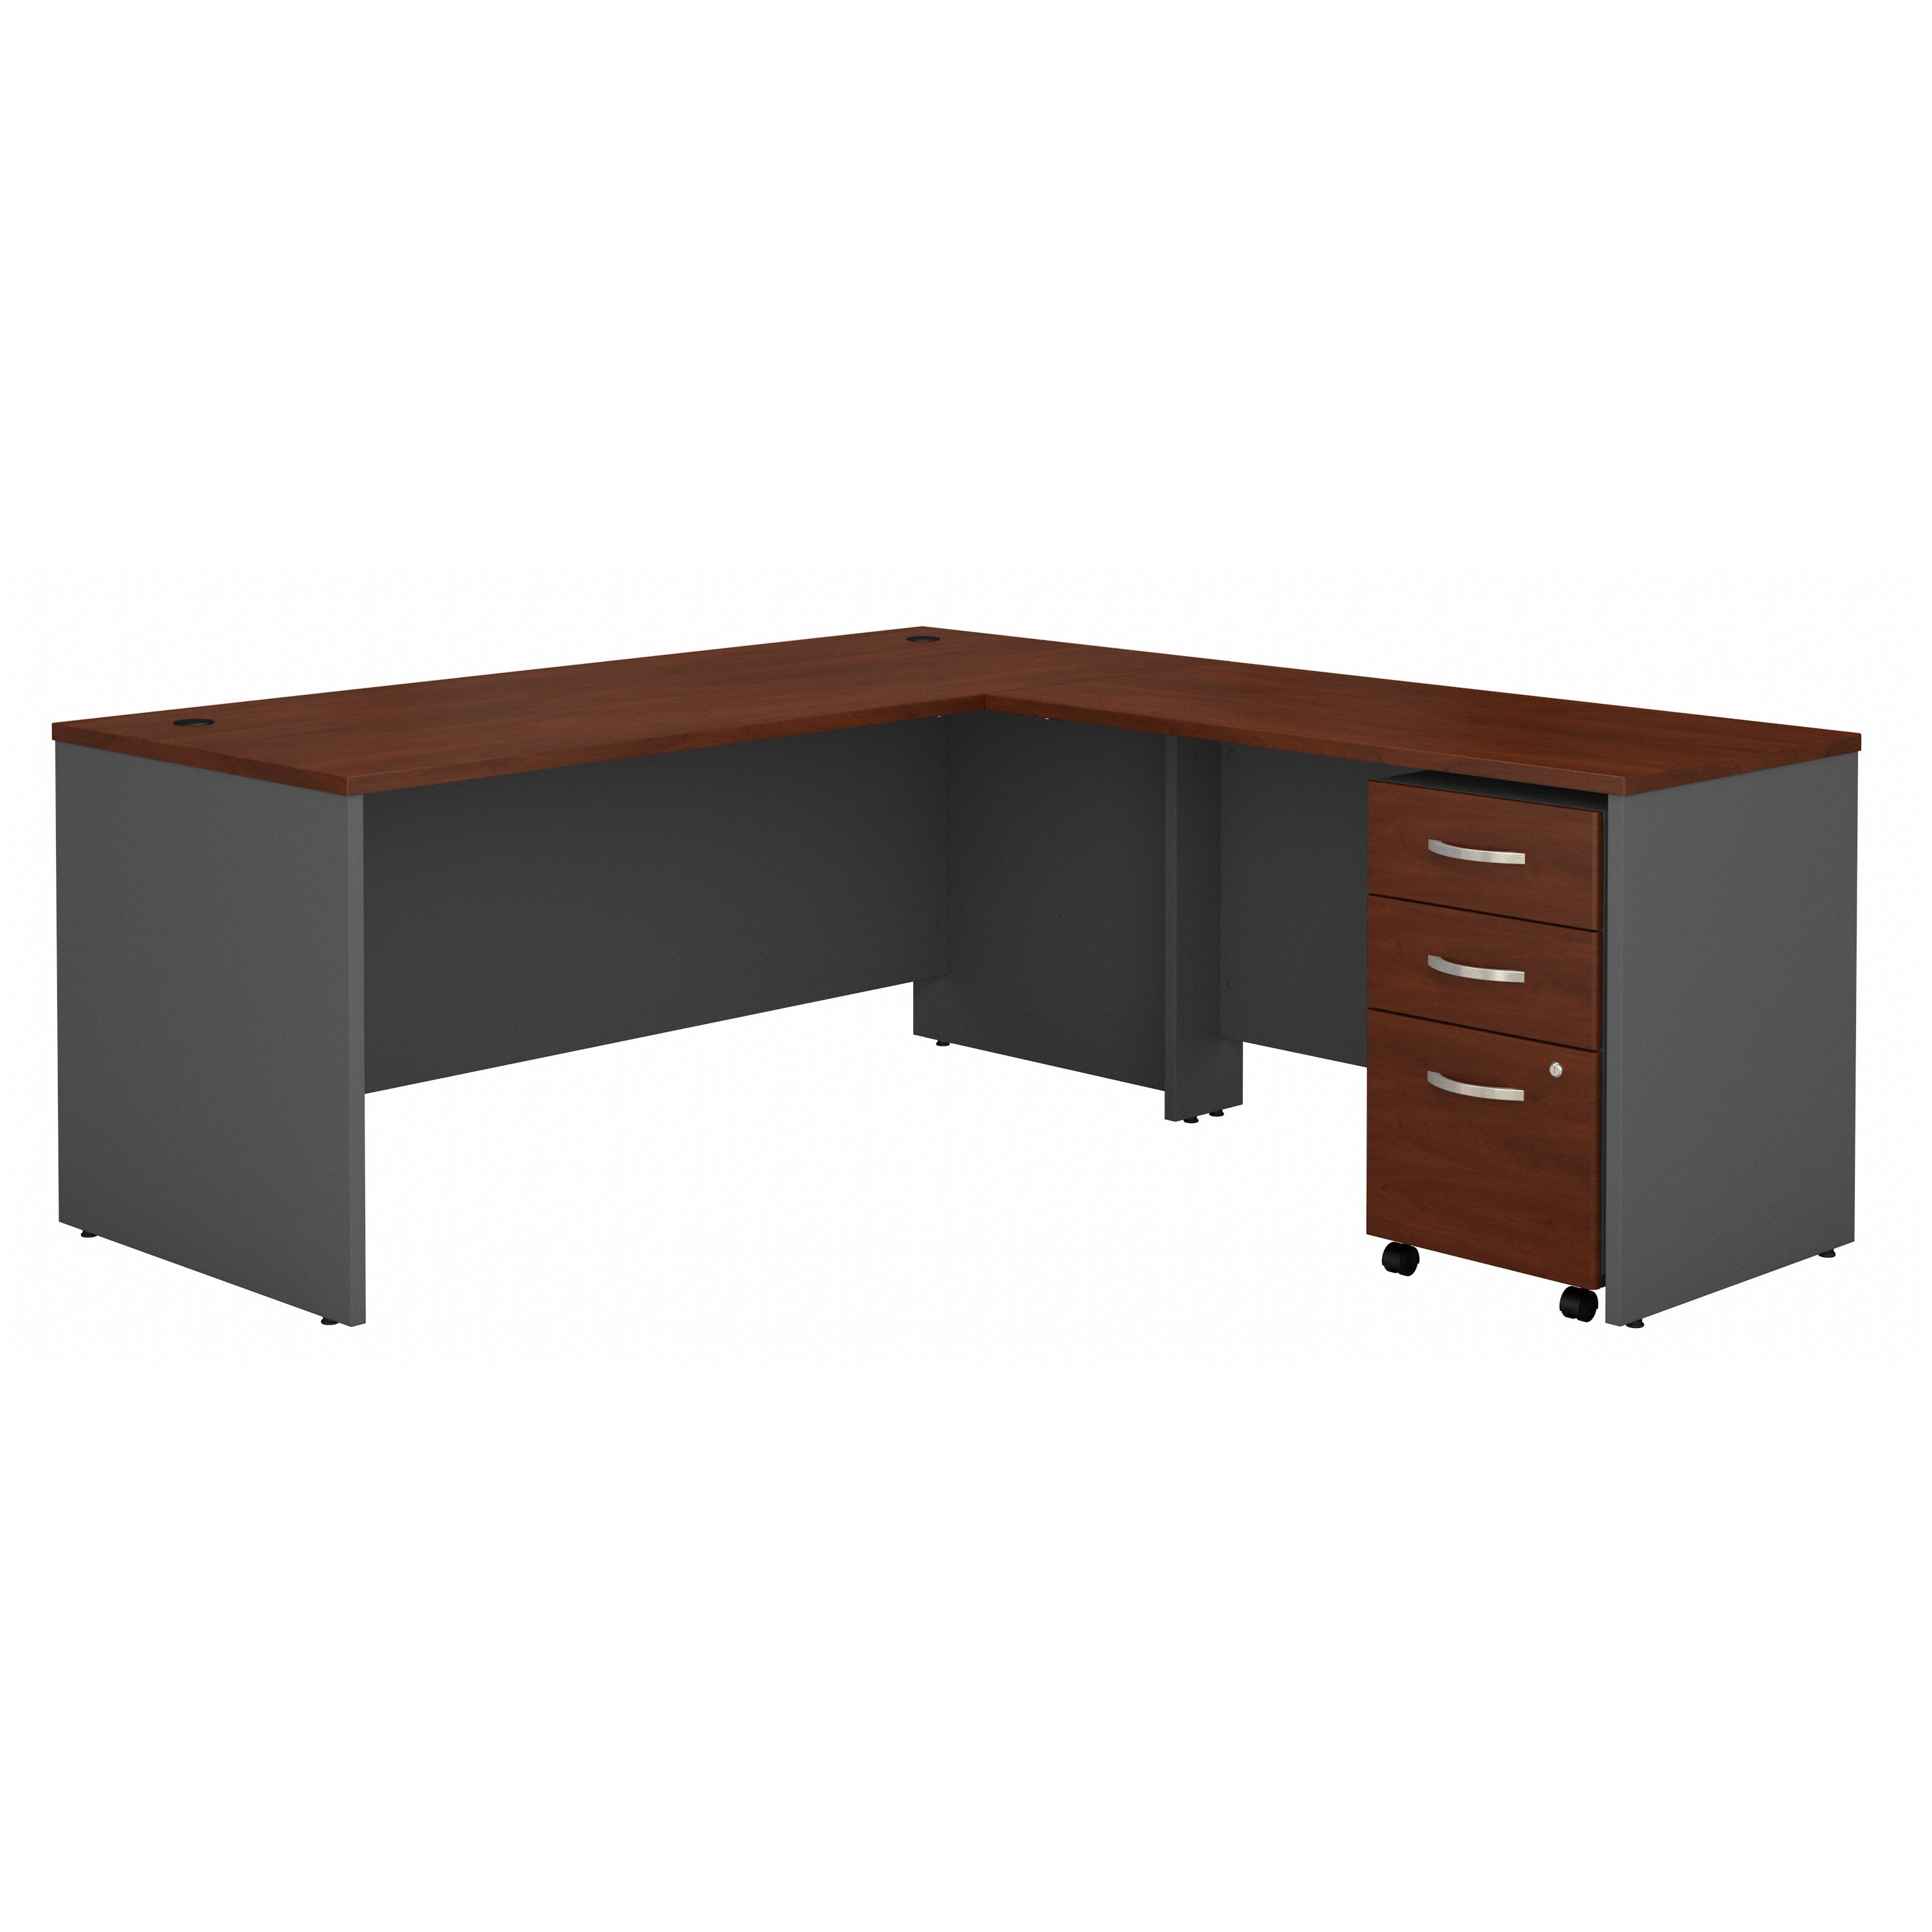 Shop Bush Business Furniture Series C 72W L Shaped Desk with 48W Return and Mobile File Cabinet 02 SRC001HCSU #color_hansen cherry/graphite gray